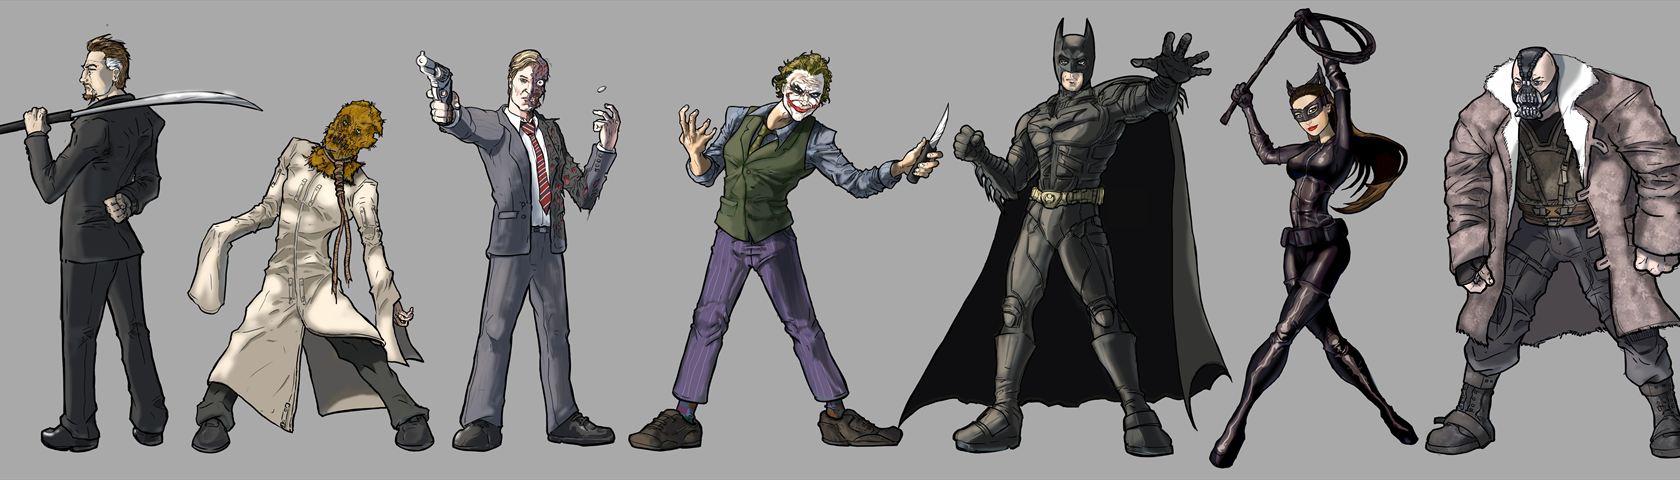 Batman and Villains